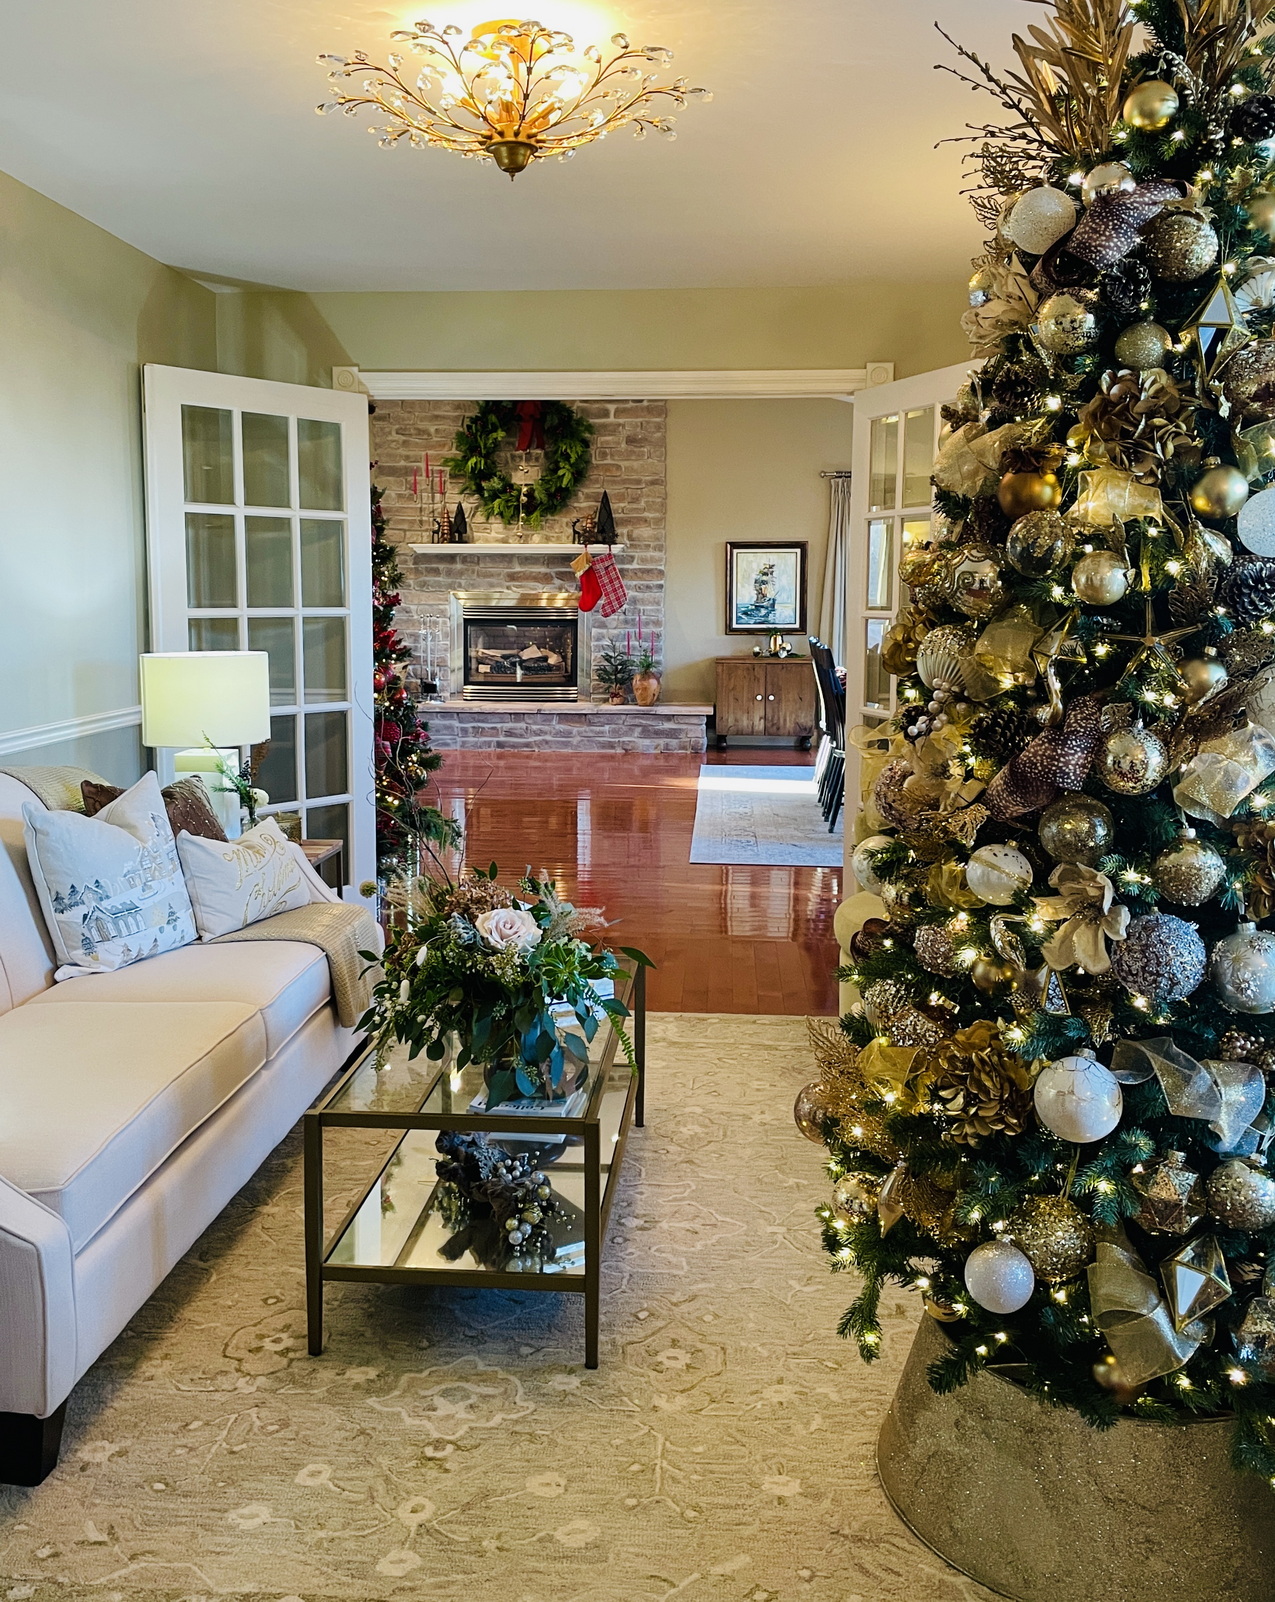 Homes for the Holidays 2022 Christmas tree